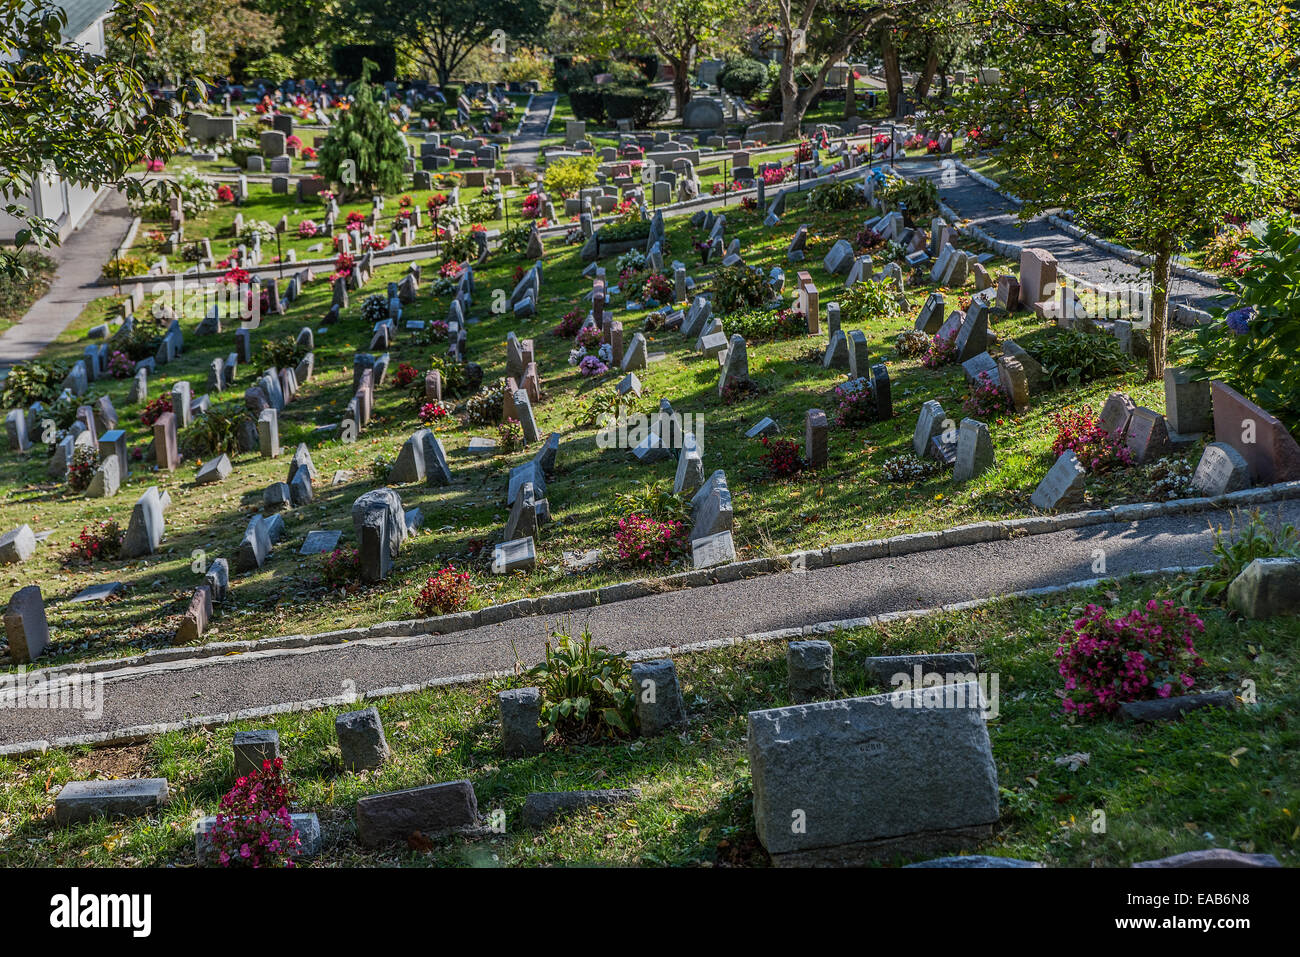 Hartsdale Pet Cemetery, älteste operative Tierfriedhof der Welt, Hartsdale, New York, USA Stockfoto